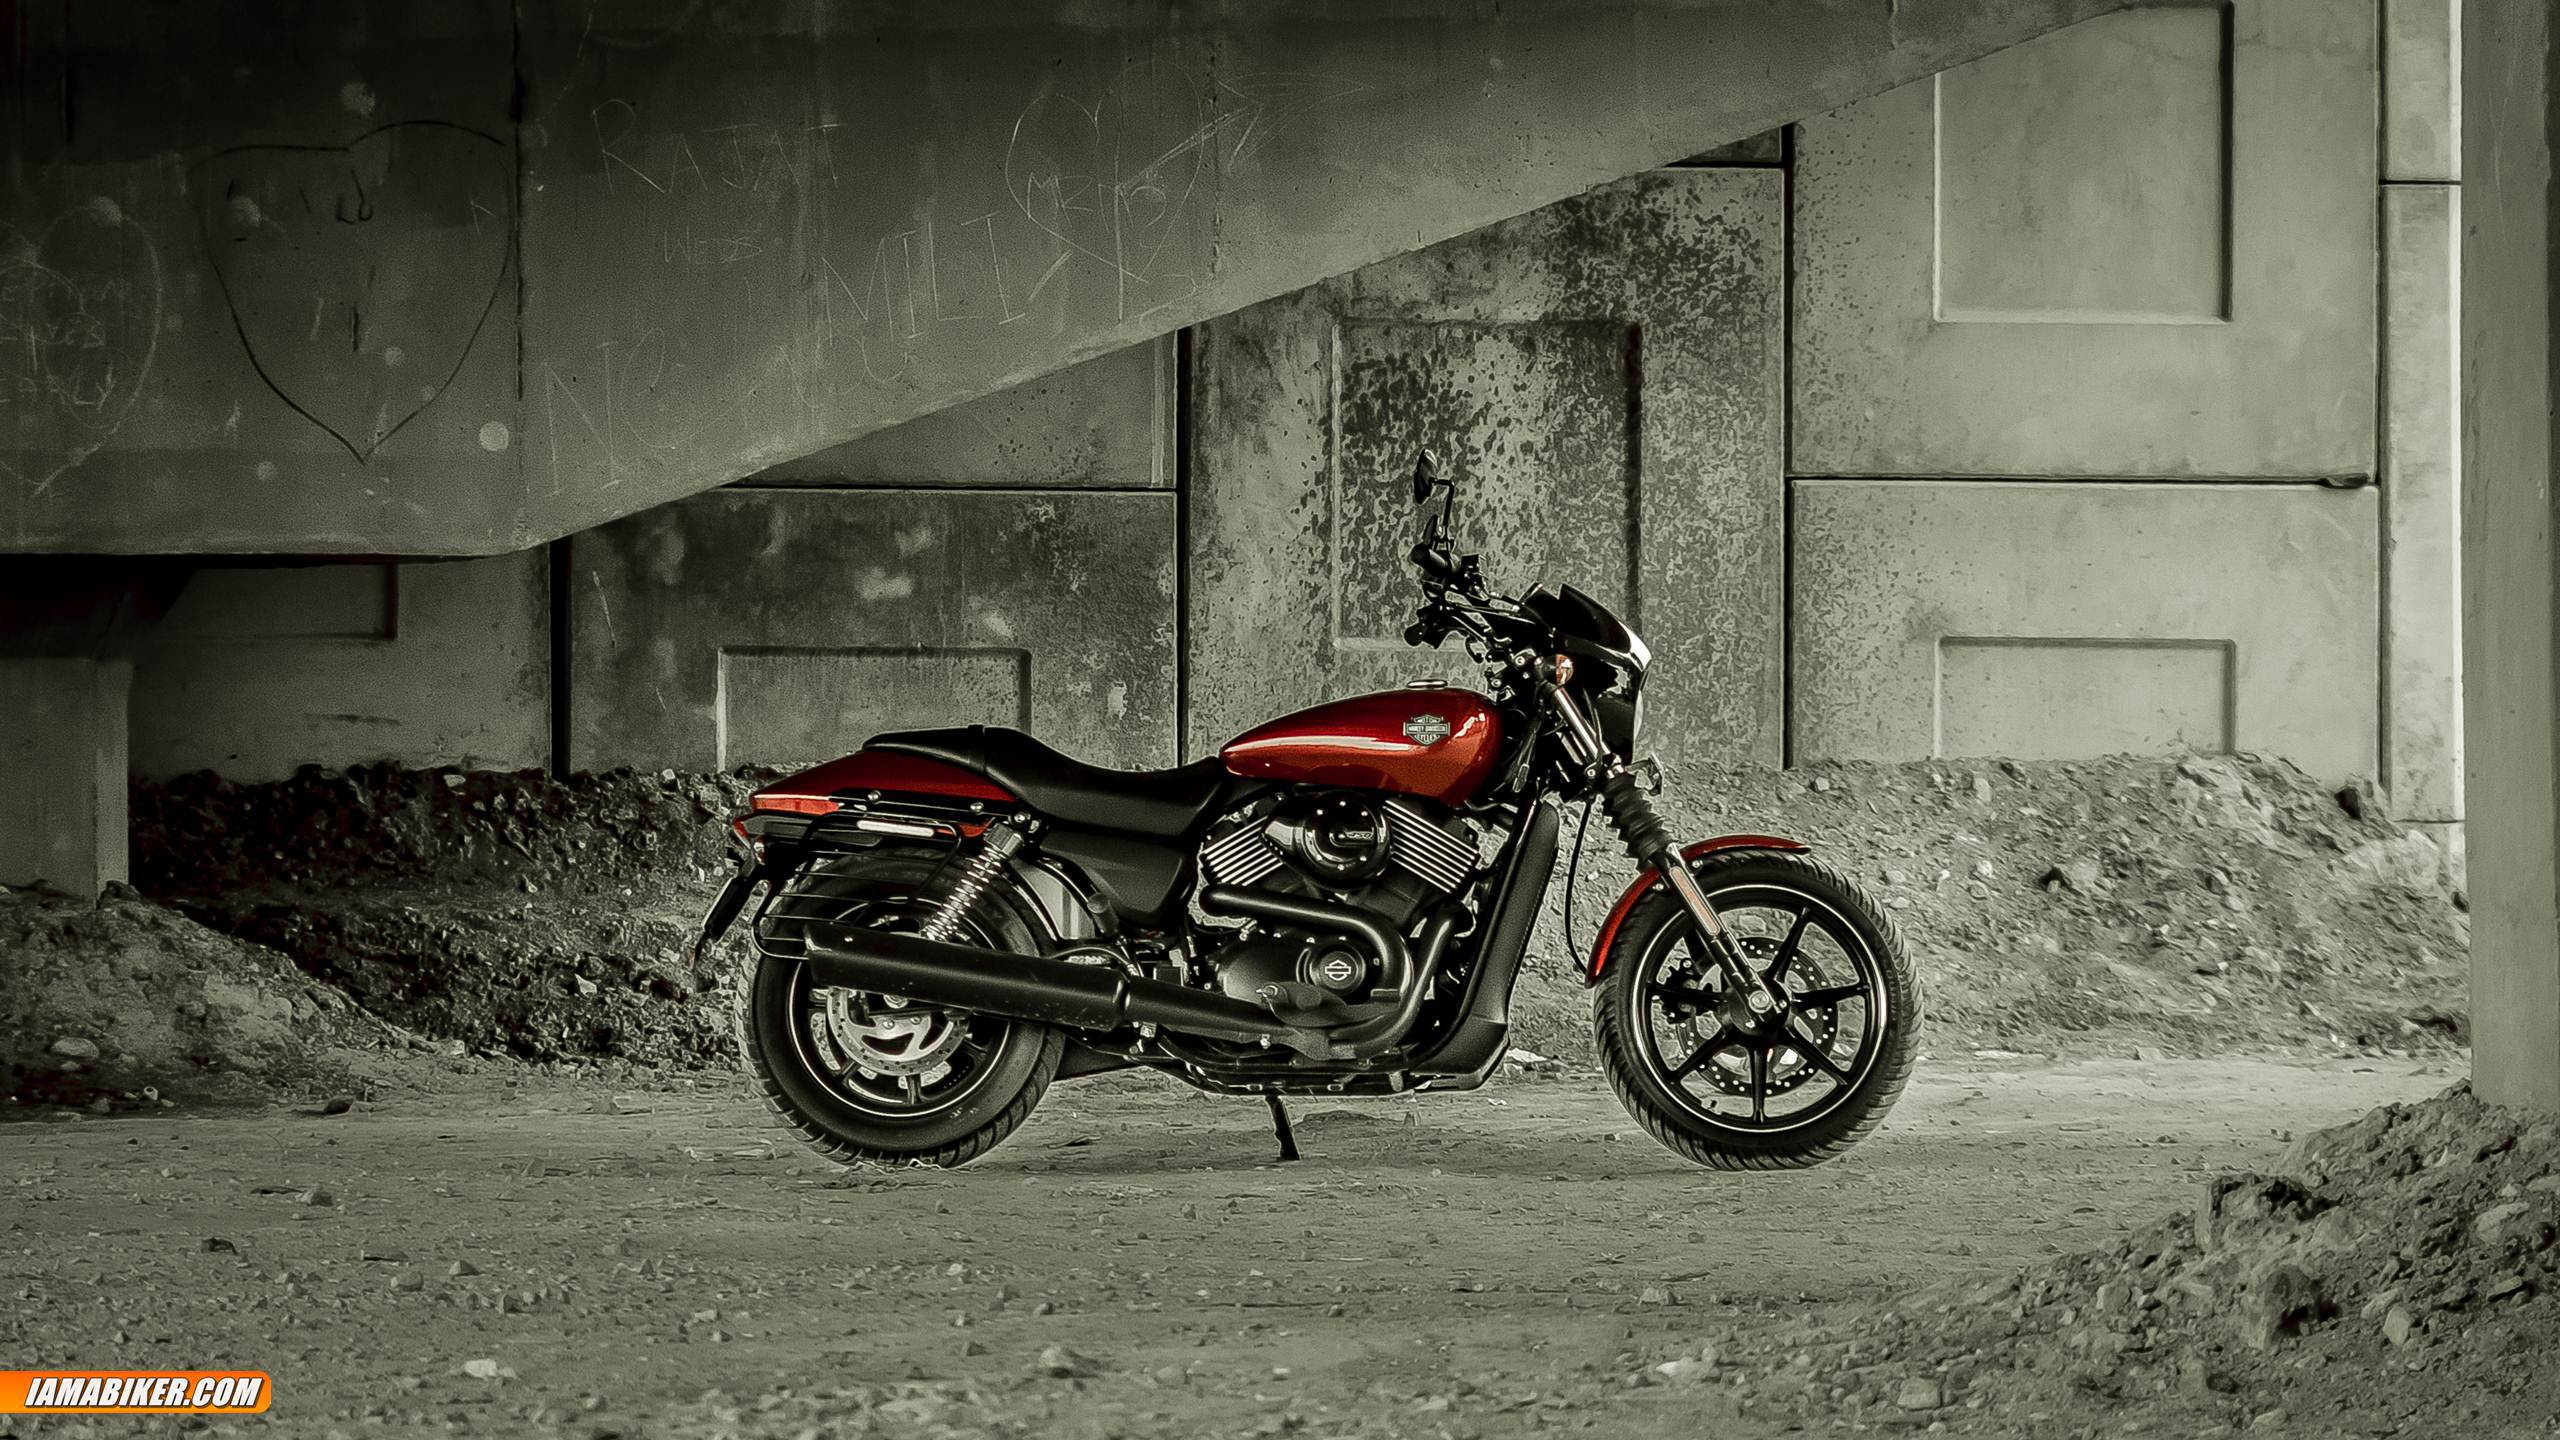 Harley Davidson Street HD Wallpaper Iamabiker